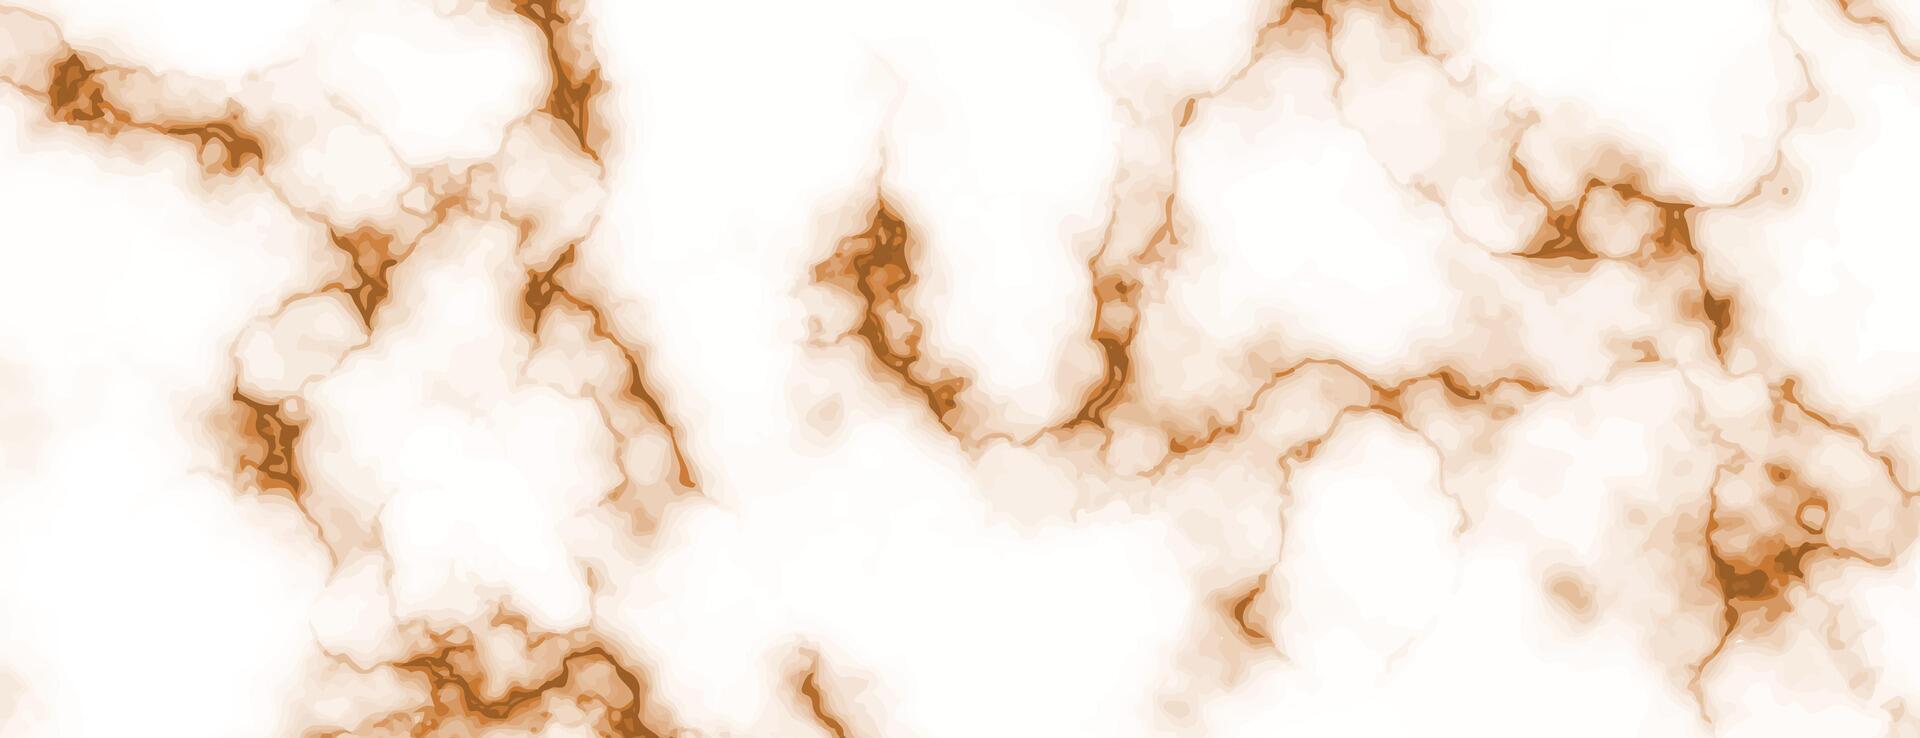 marmor textur mönster realistisk baner design vektor